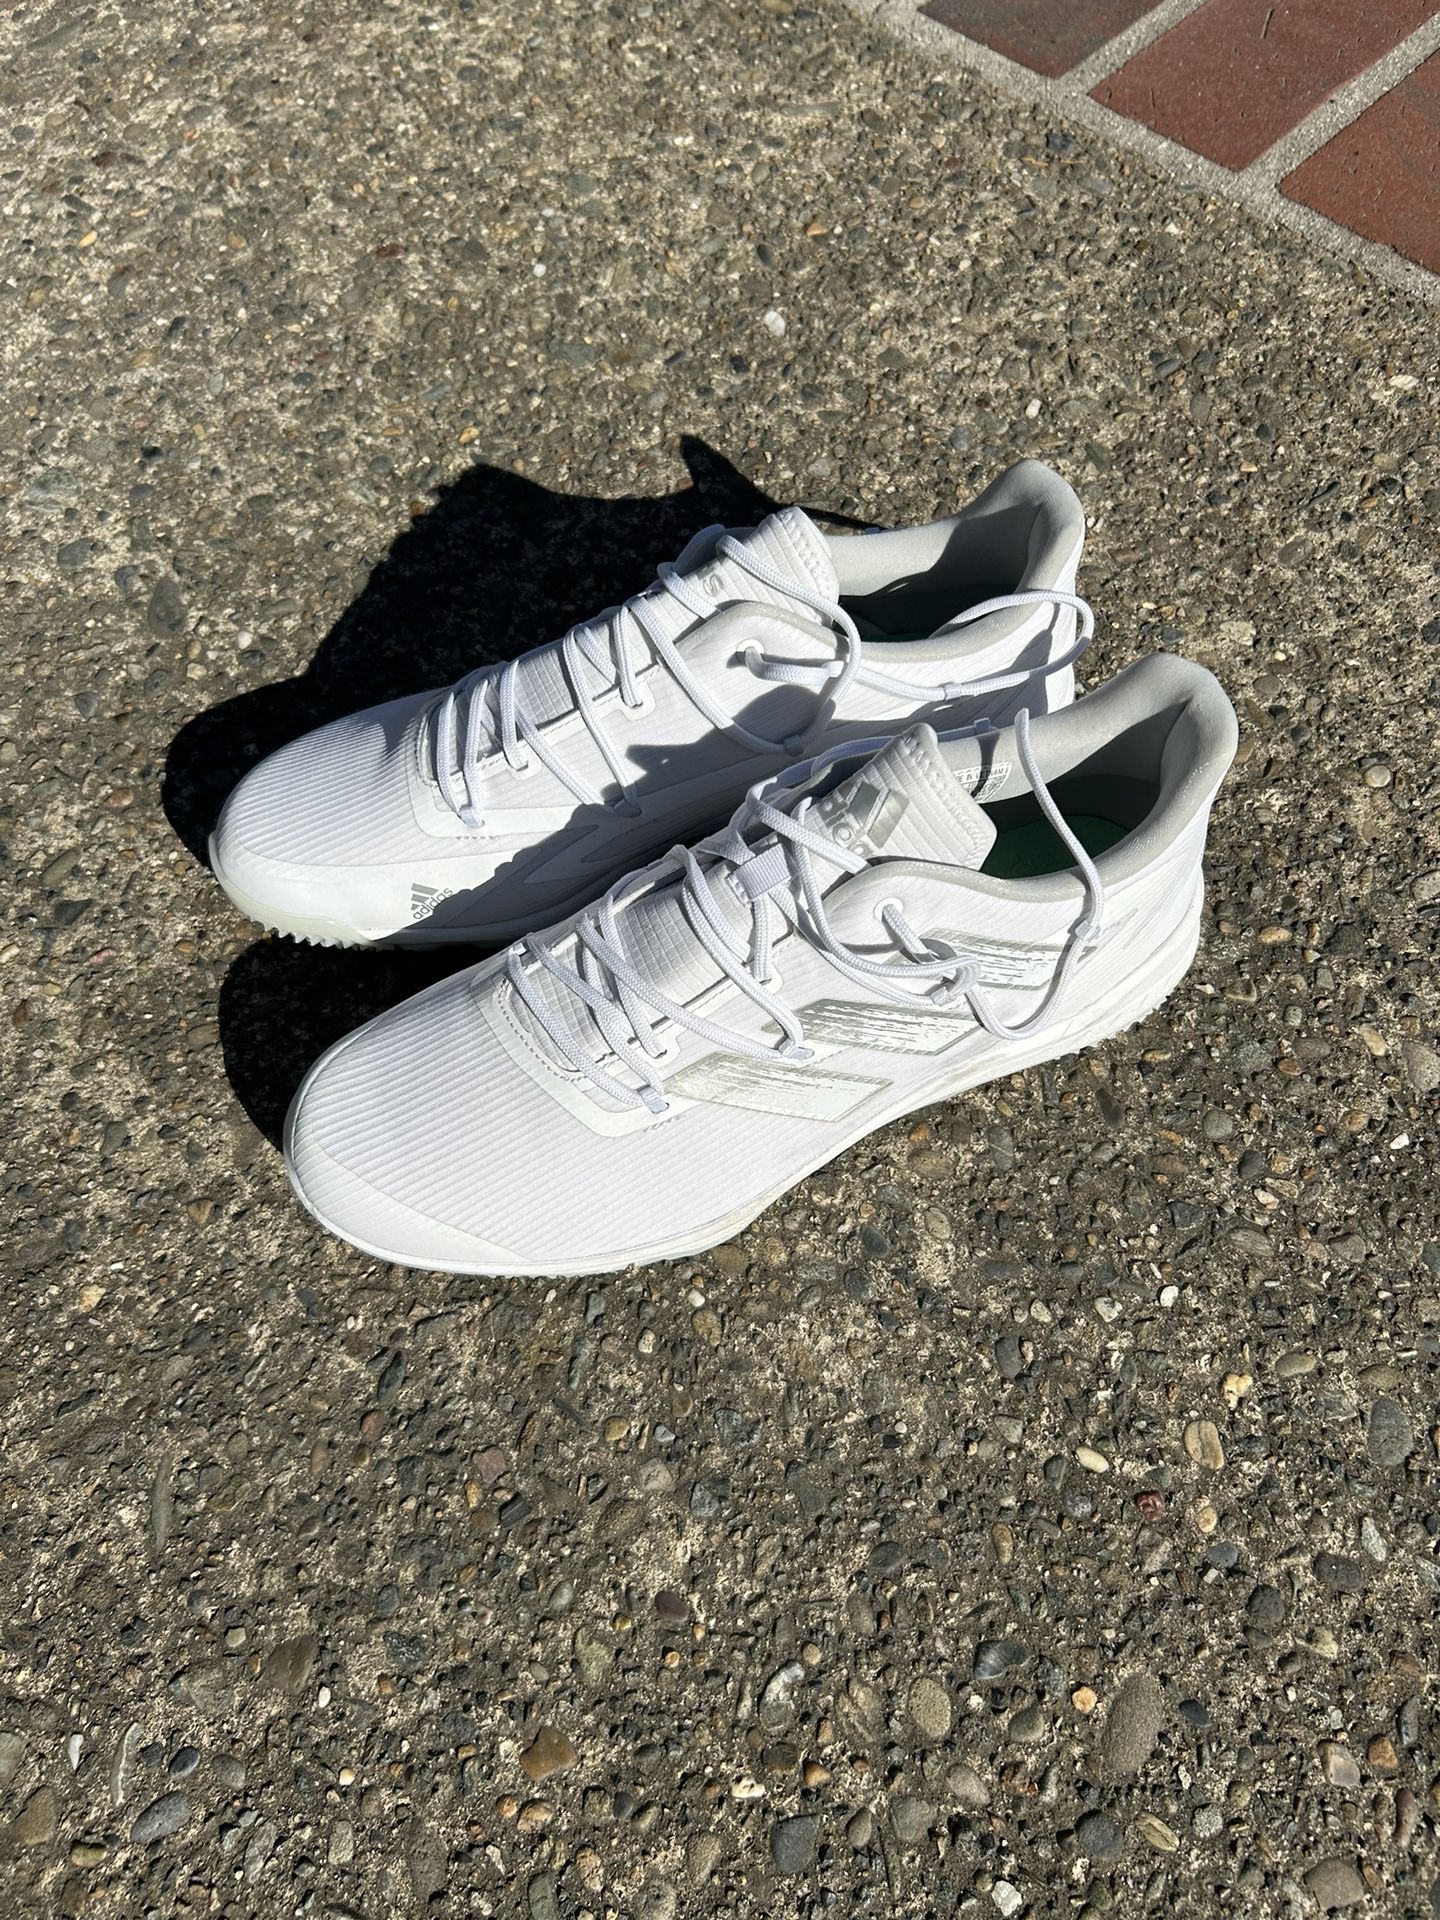 Size 12 Adidas Men's Adizero Afterburner 8 Turf Baseball Shoe